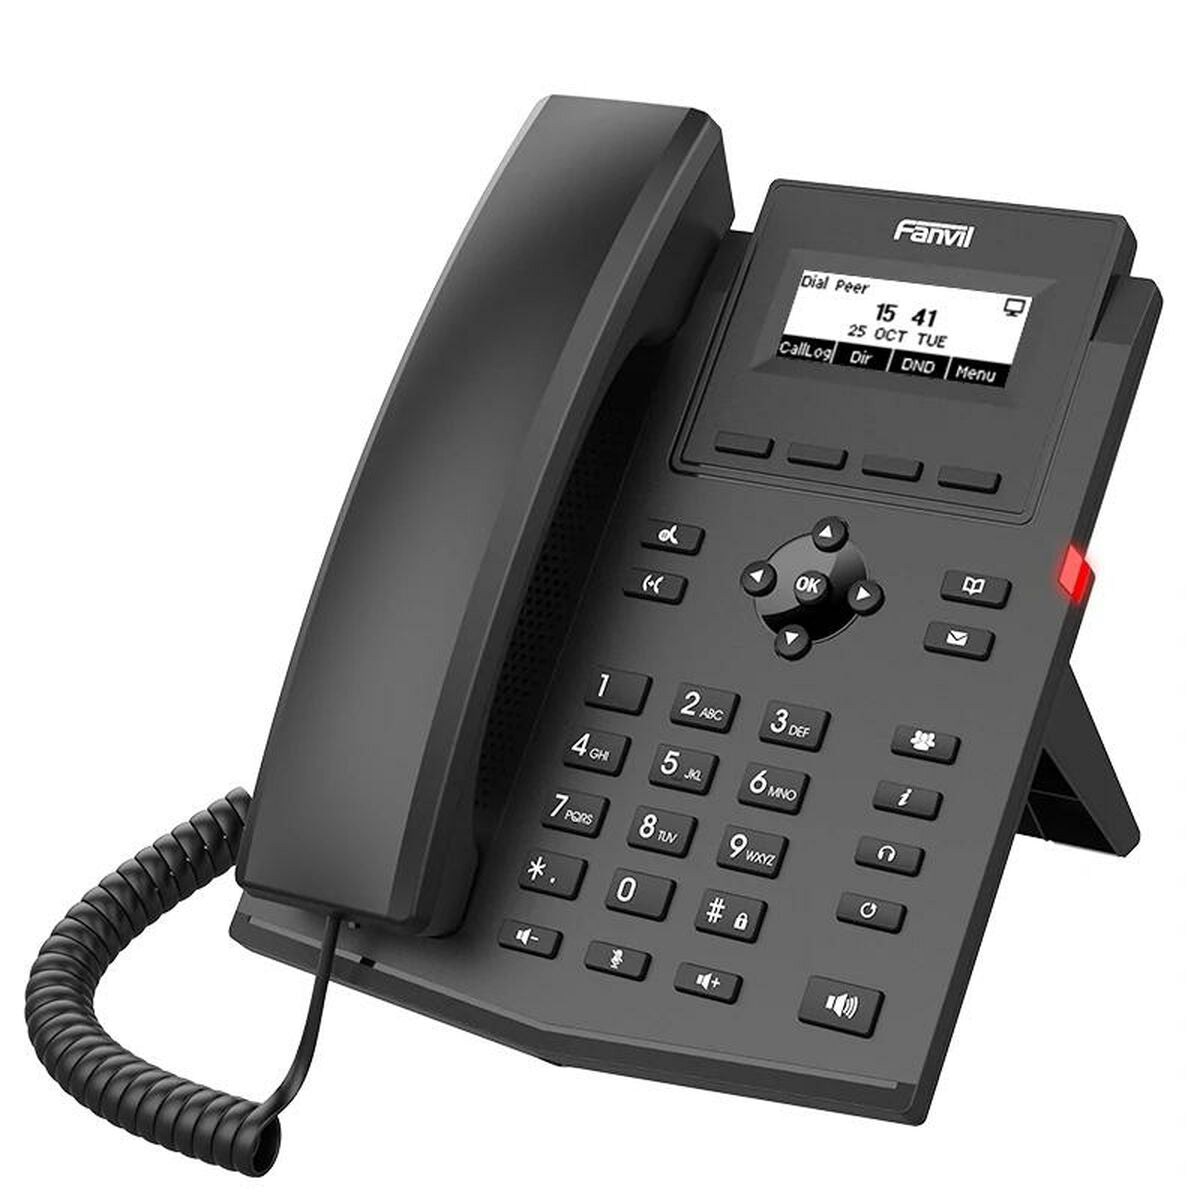 Landline Telephone Fanvil X301G, Fanvil, Electronics, Landline telephones and accessories, landline-telephone-fanvil-x301g, Brand_Fanvil, category-reference-2609, category-reference-2617, category-reference-2619, category-reference-t-18372, category-reference-t-18382, category-reference-t-19653, Condition_NEW, office, Price_50 - 100, telephones & tablets, Teleworking, RiotNook